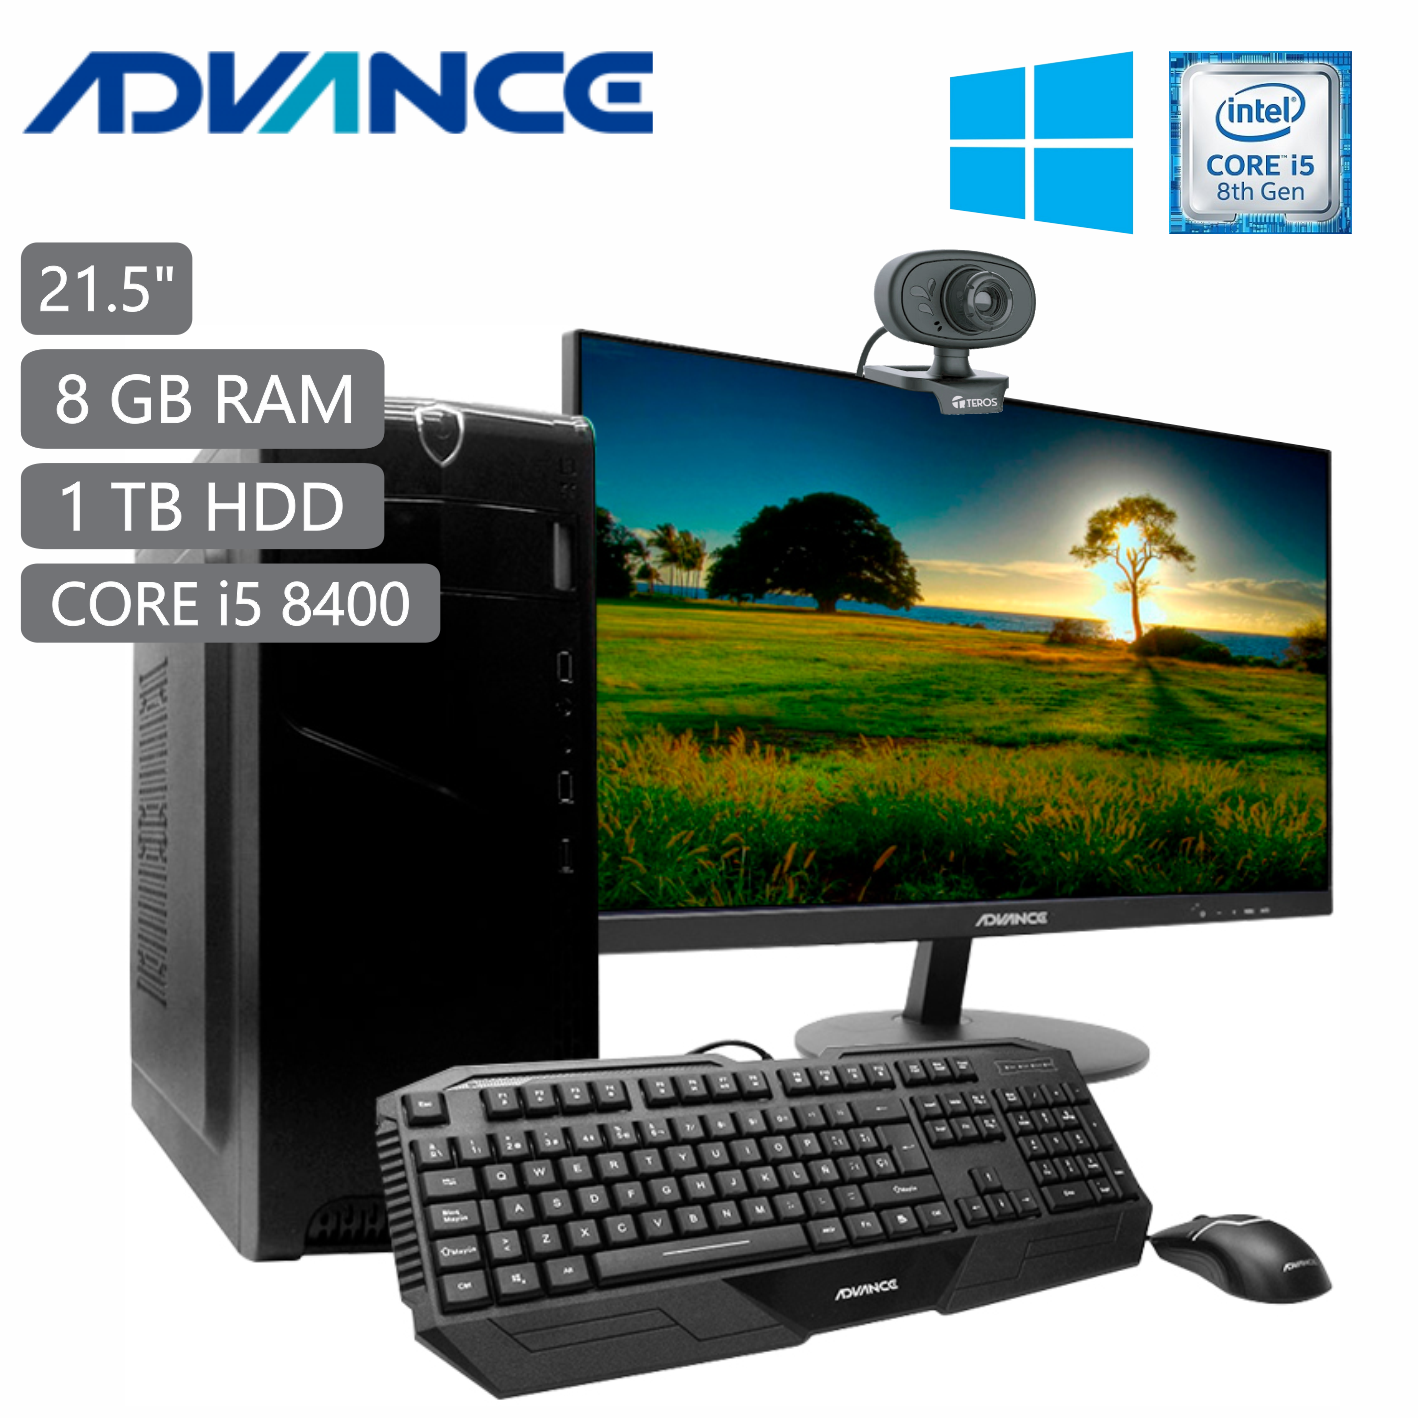 Computadora Advance Vission VS1073, Intel Core i5-8400 2.80GHz, 8GB DDR4, 1TB SATA, Camara Web Teros TE-9054